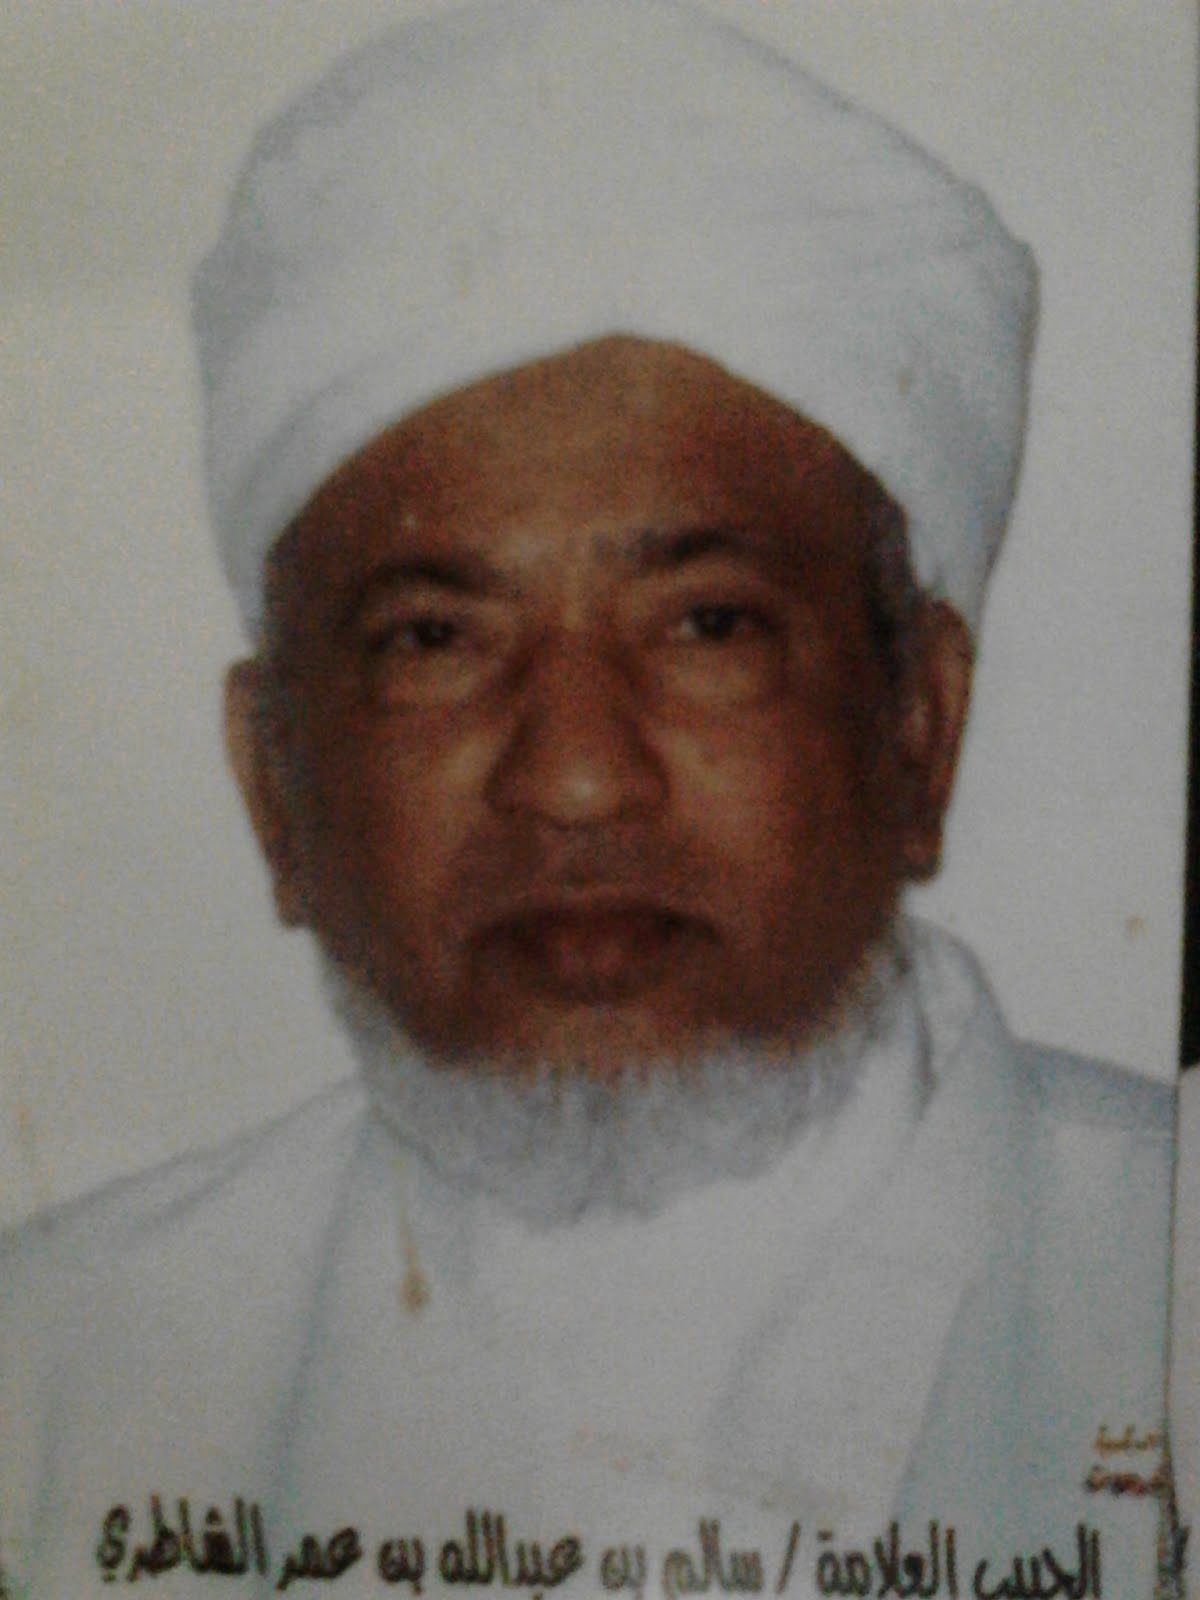 Habib Salim bin Abdullah bin Umar as-Syathirie